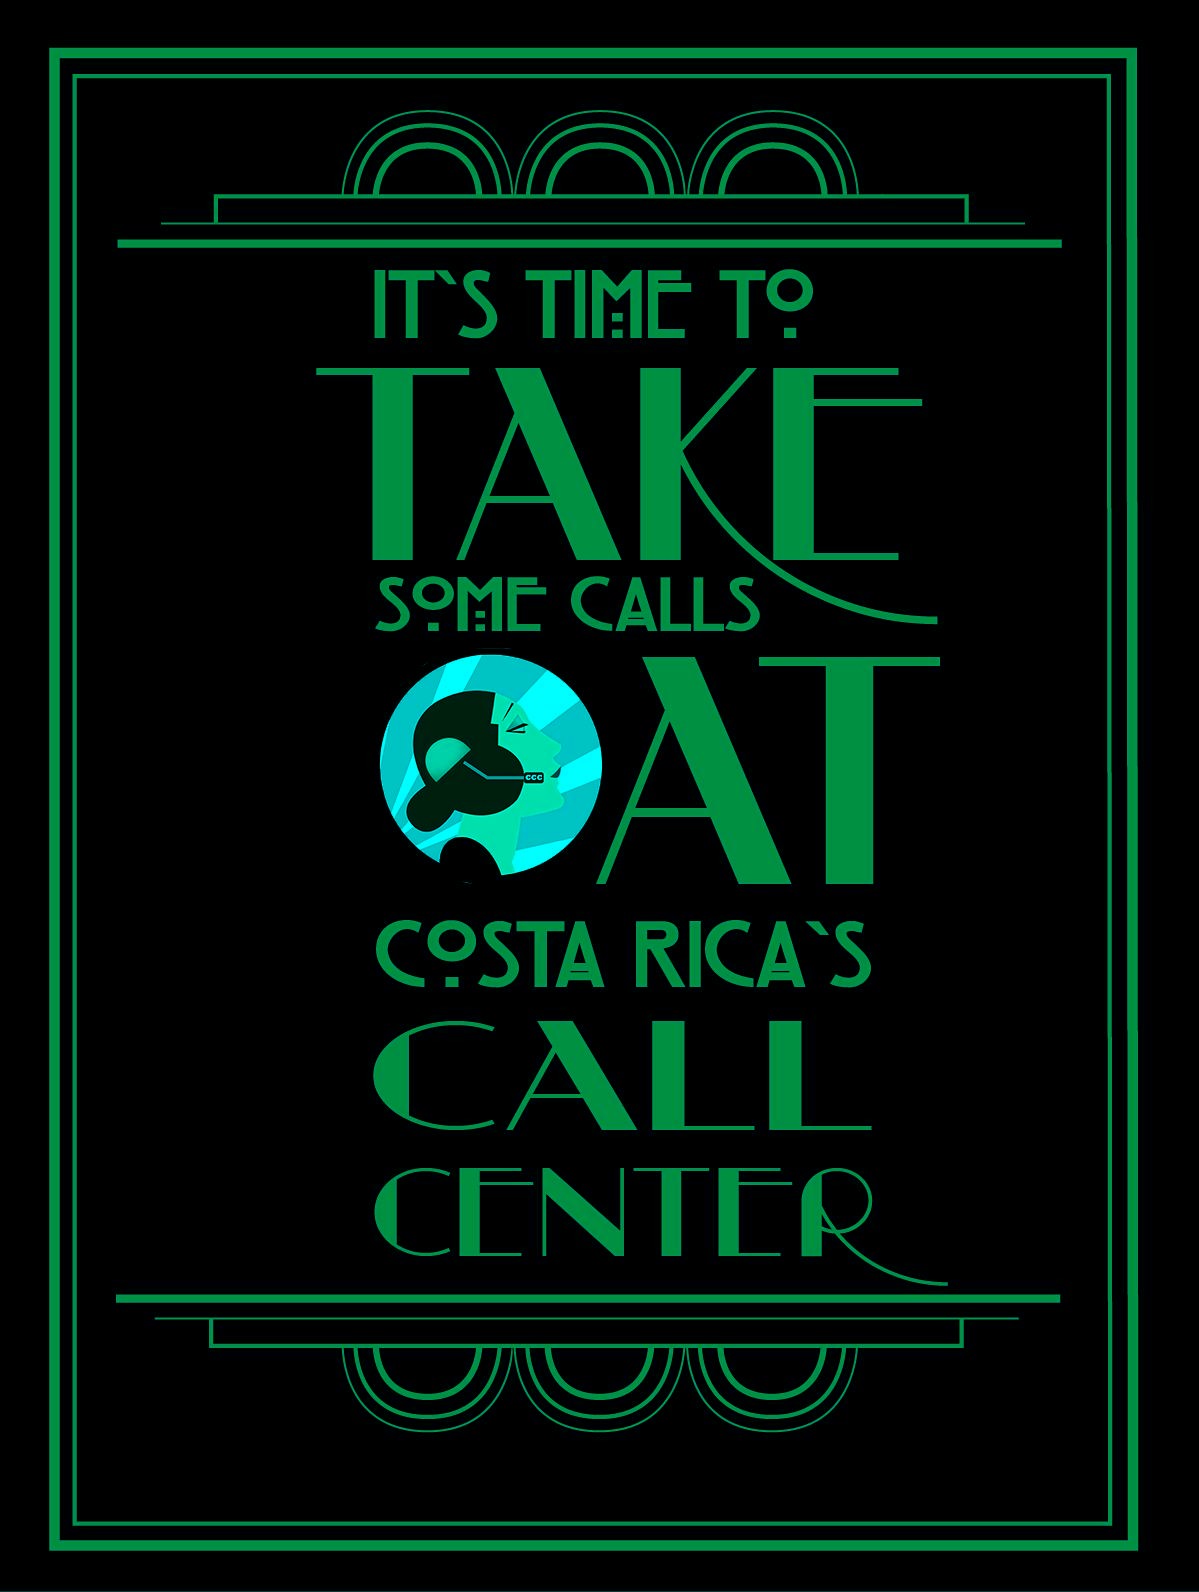 CALL CENTRE SHIFT COSTA RICA.jpg  by richardblank